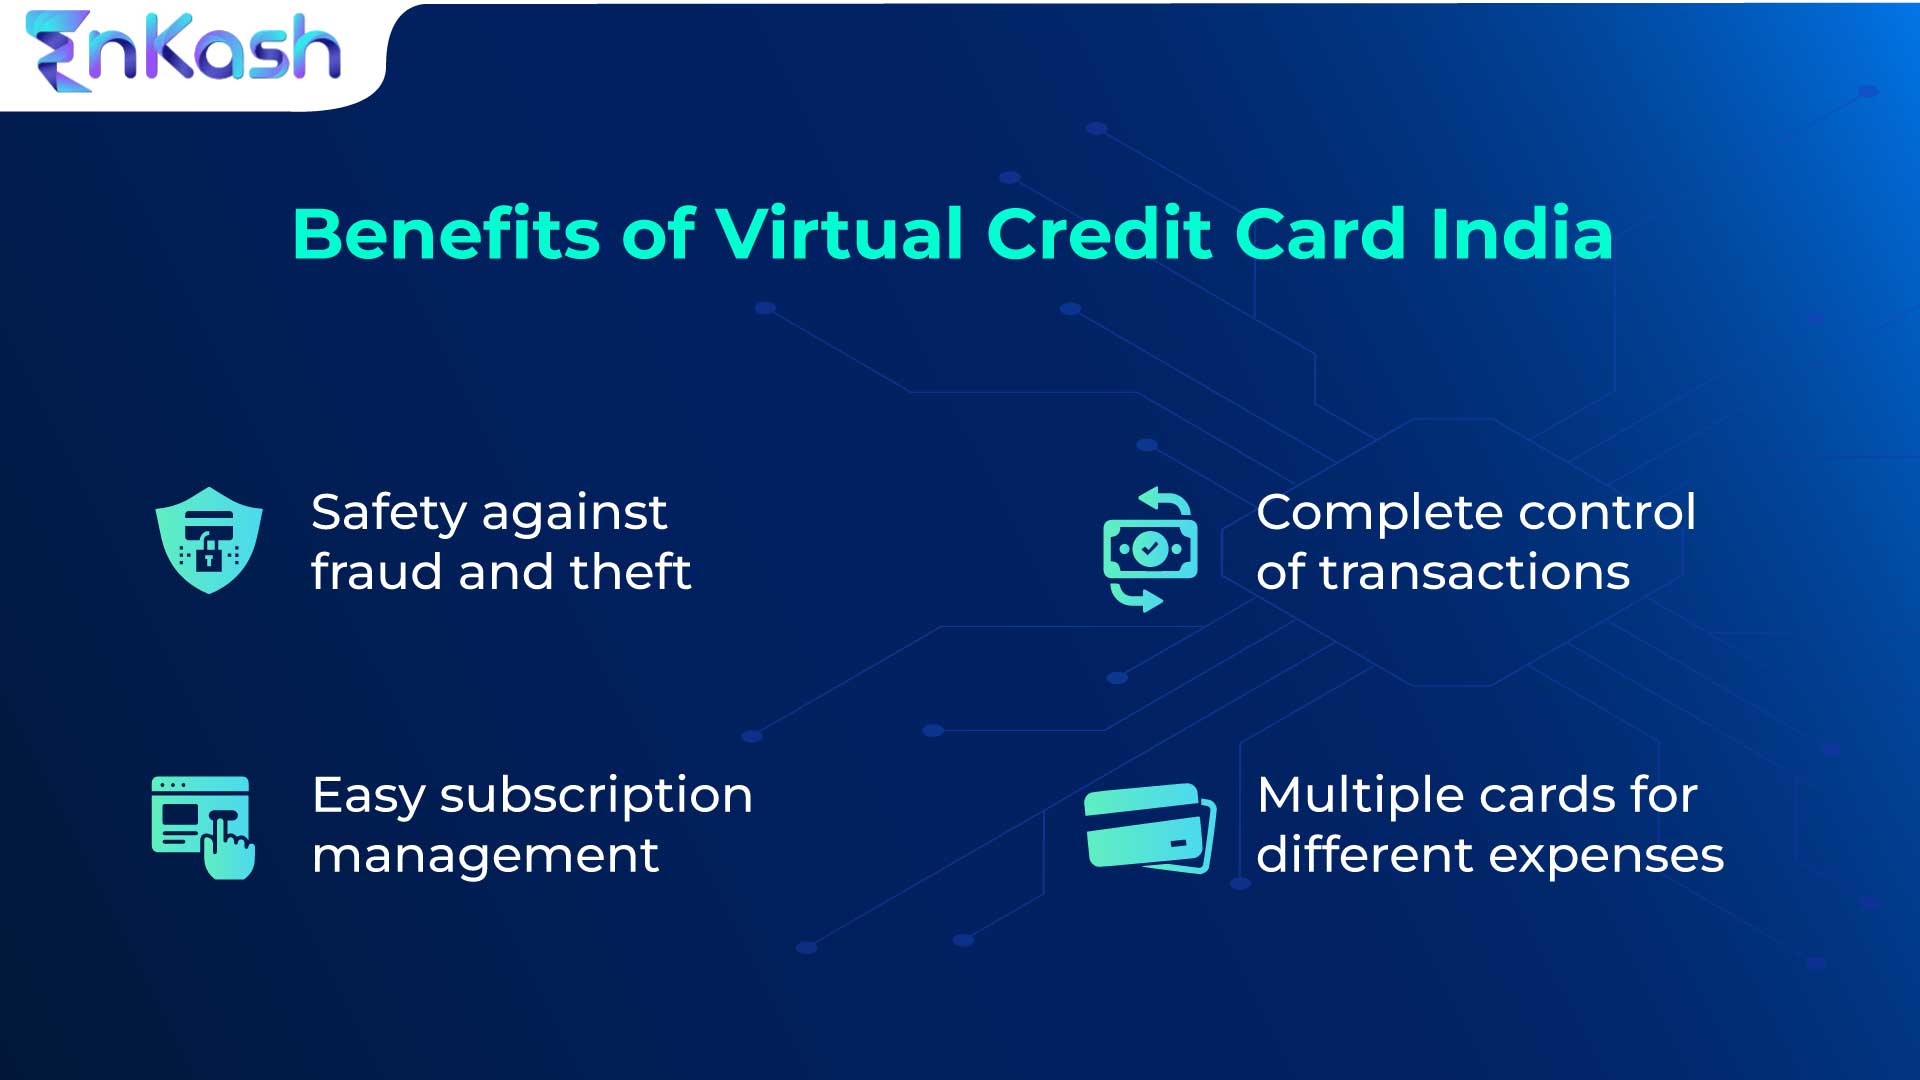 Benefits of virtual credit card India